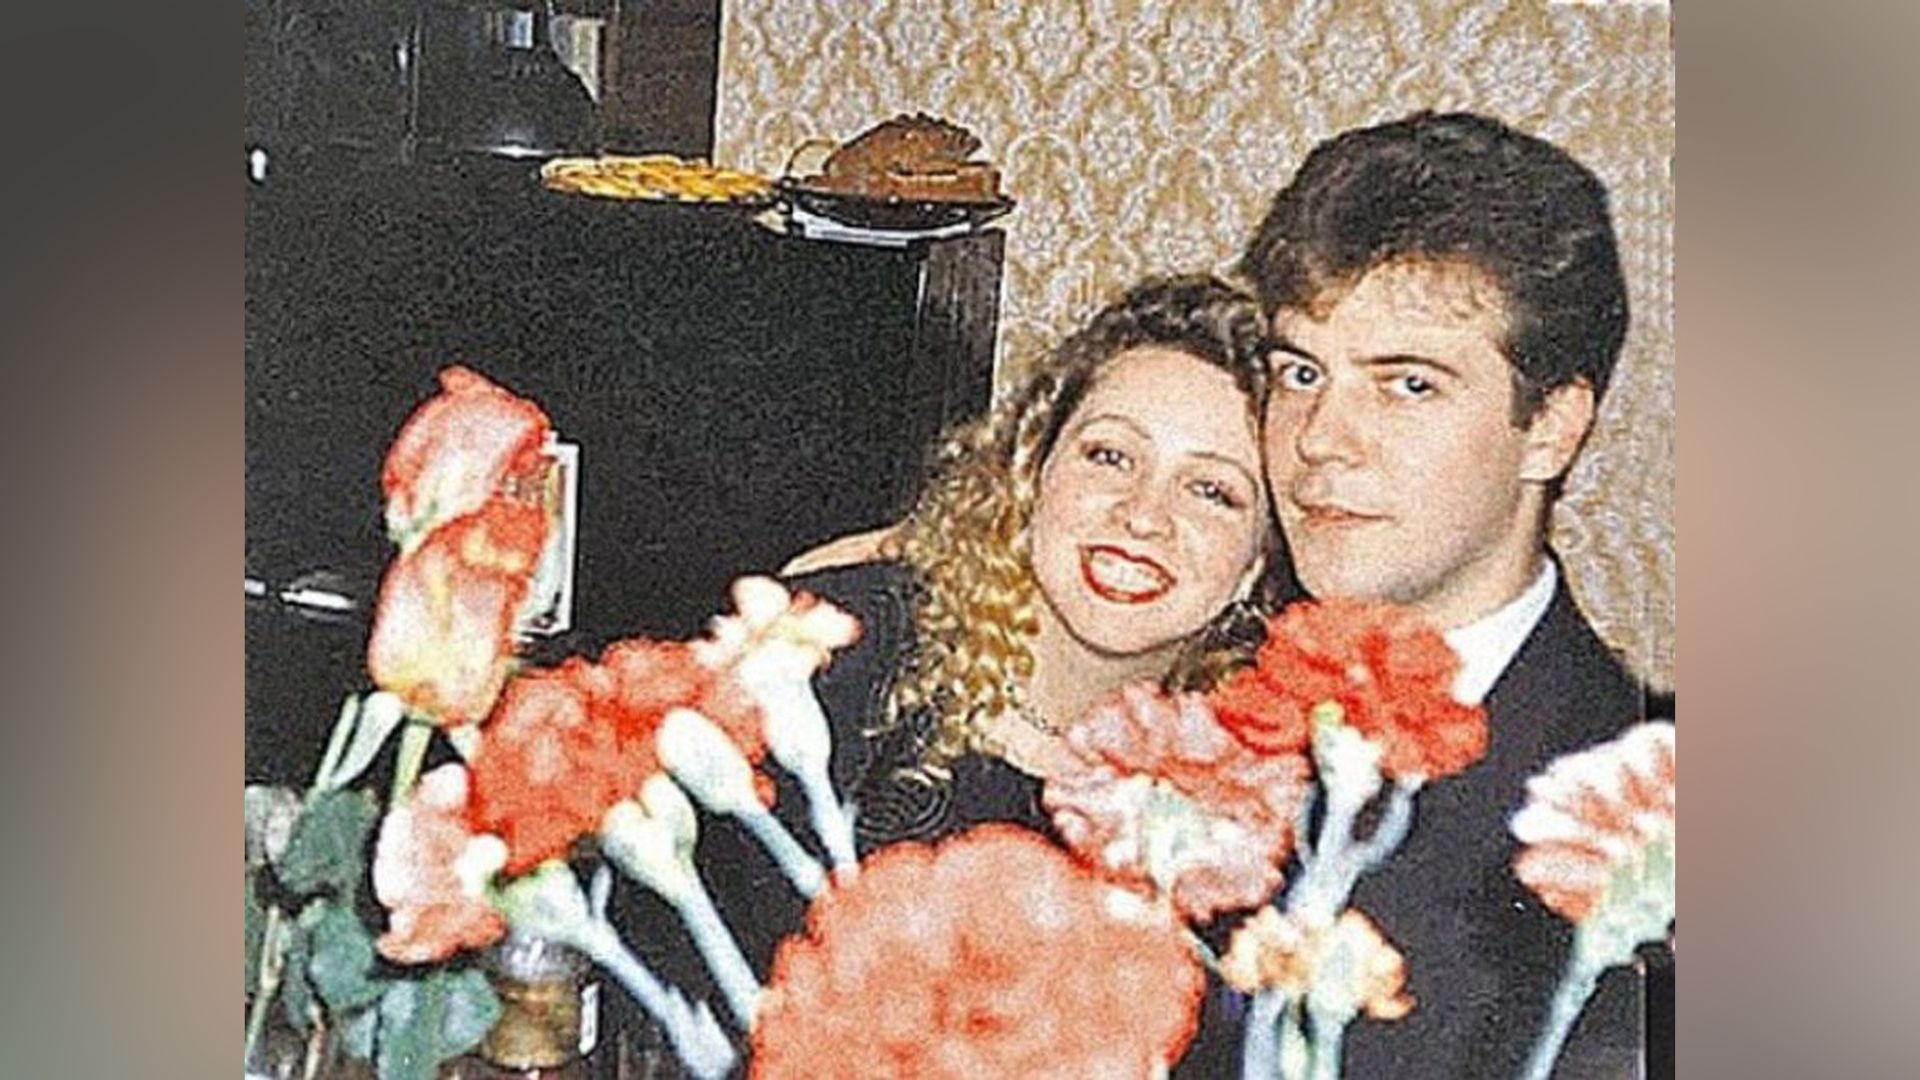 Dmitry Medvedev and Svetlana Medvedev in their youth